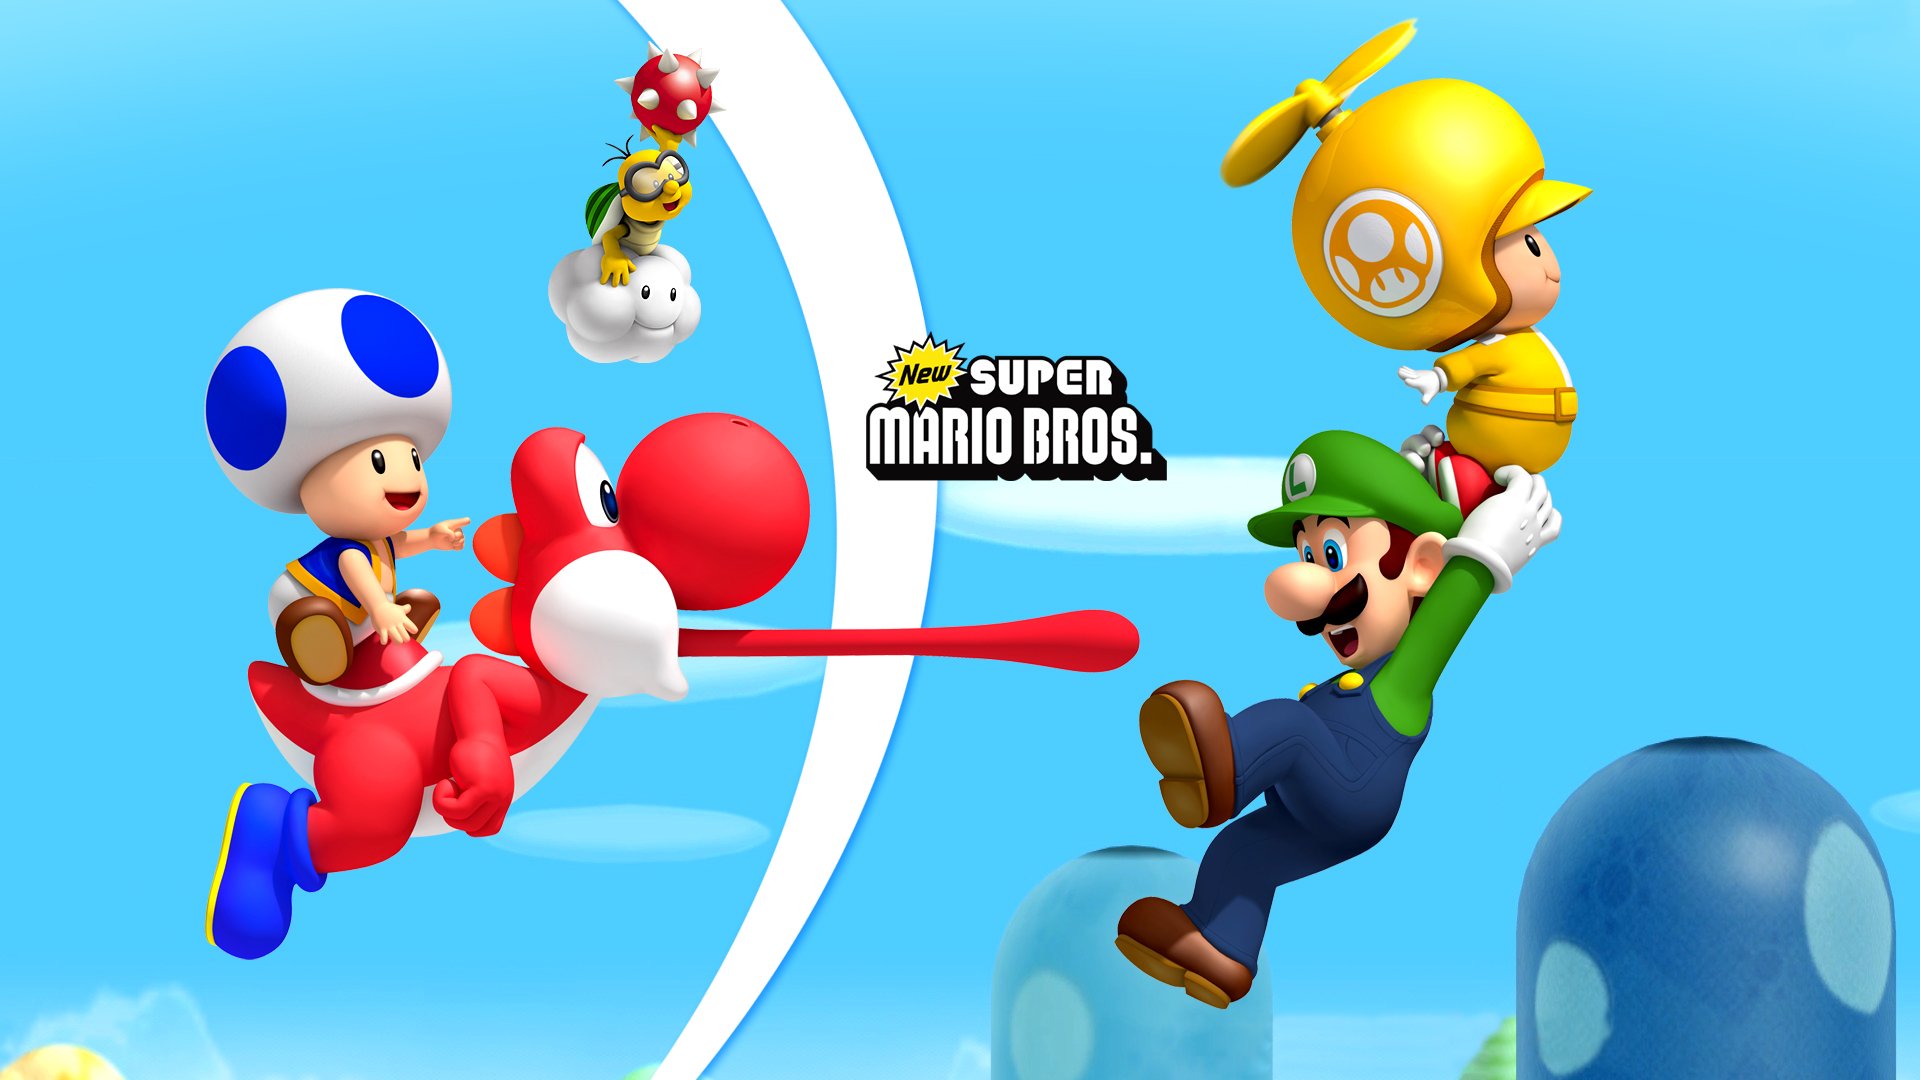 New Super Mario Bros. Wii HD Wallpaper